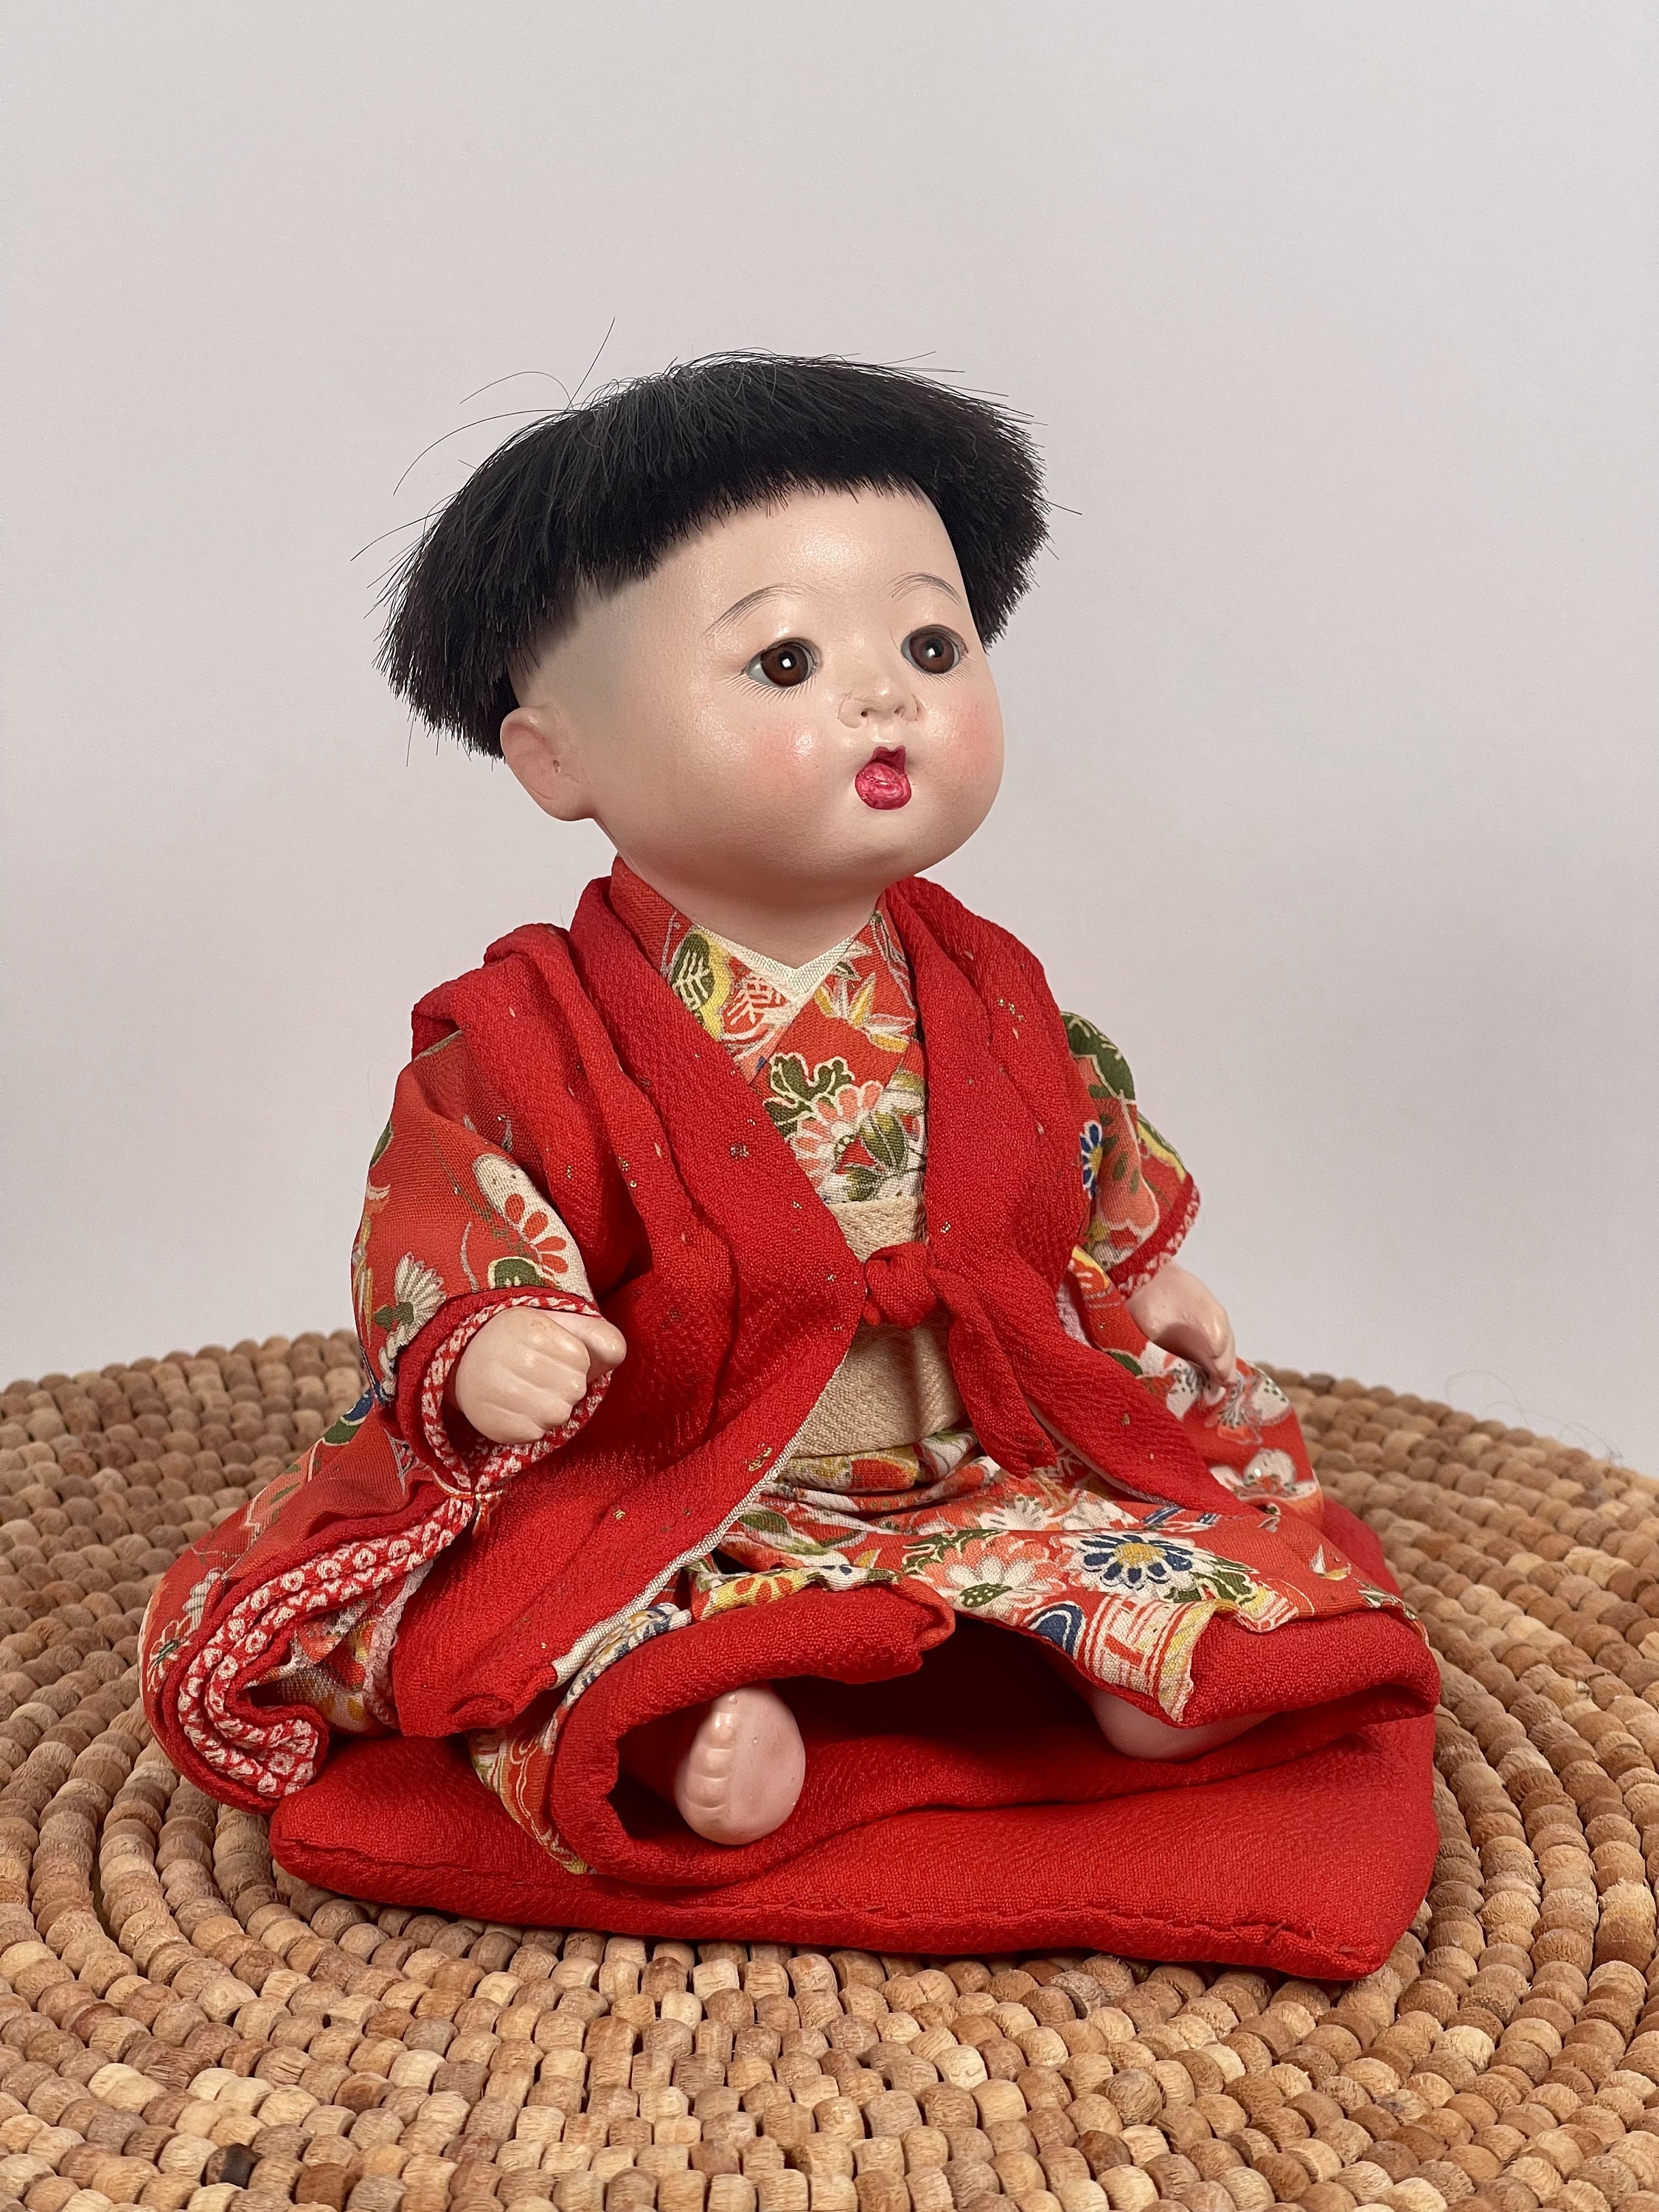 Vintage 1920 Bisque Doll Movable Hands Legs Crepe Paper Dress Japan - The  Gatherings Antique Vintage